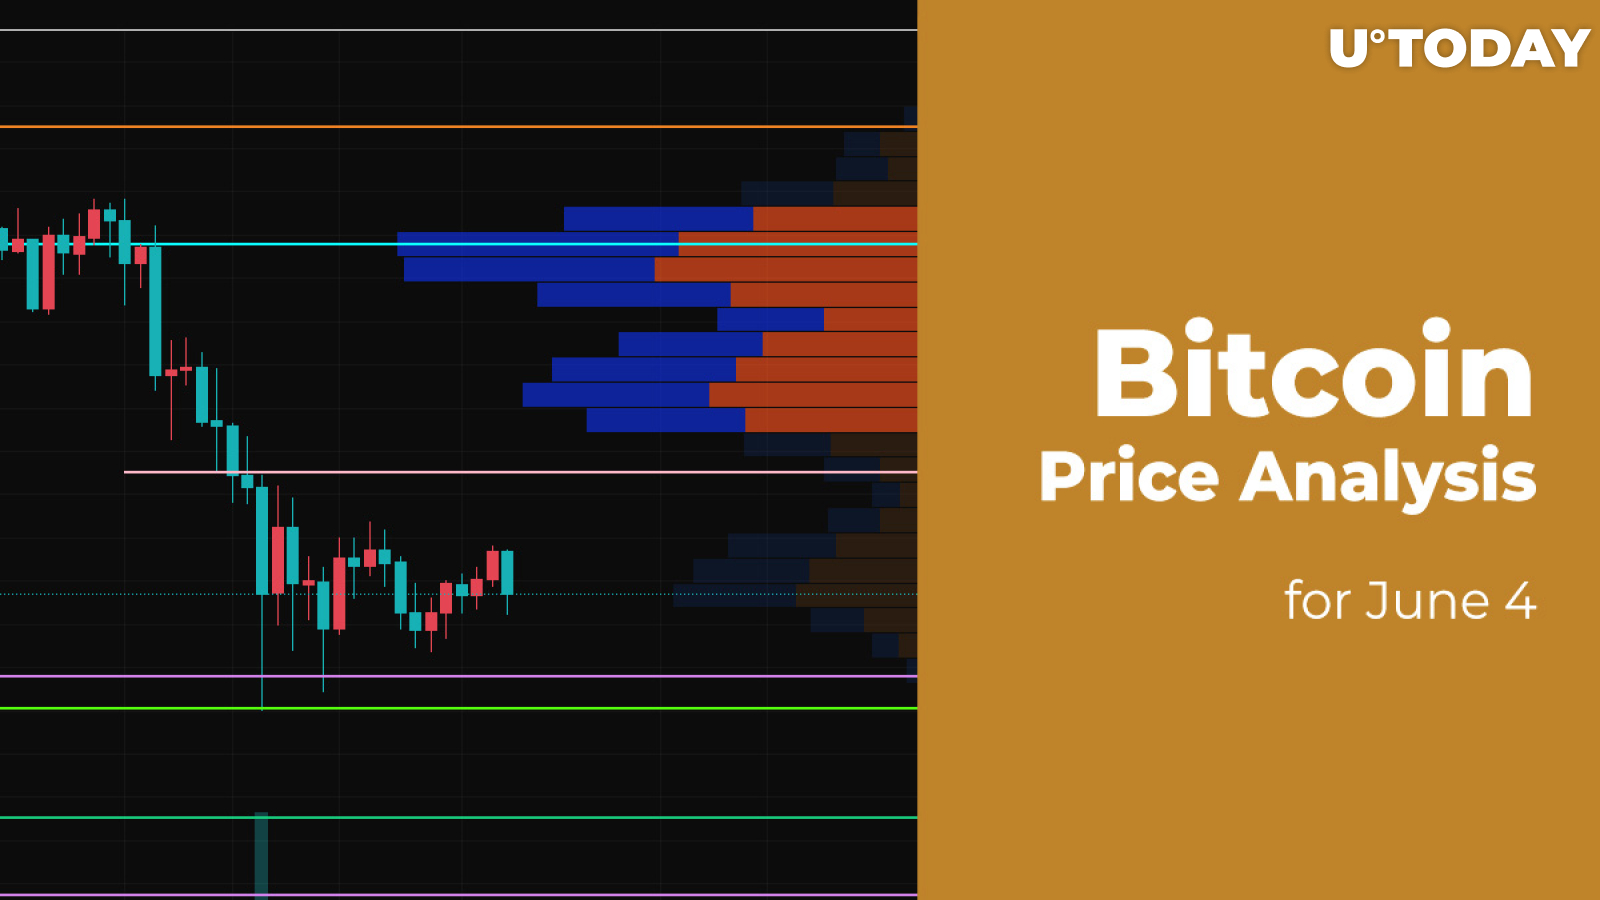 Bitcoin (BTC) Price Analysis for June 4